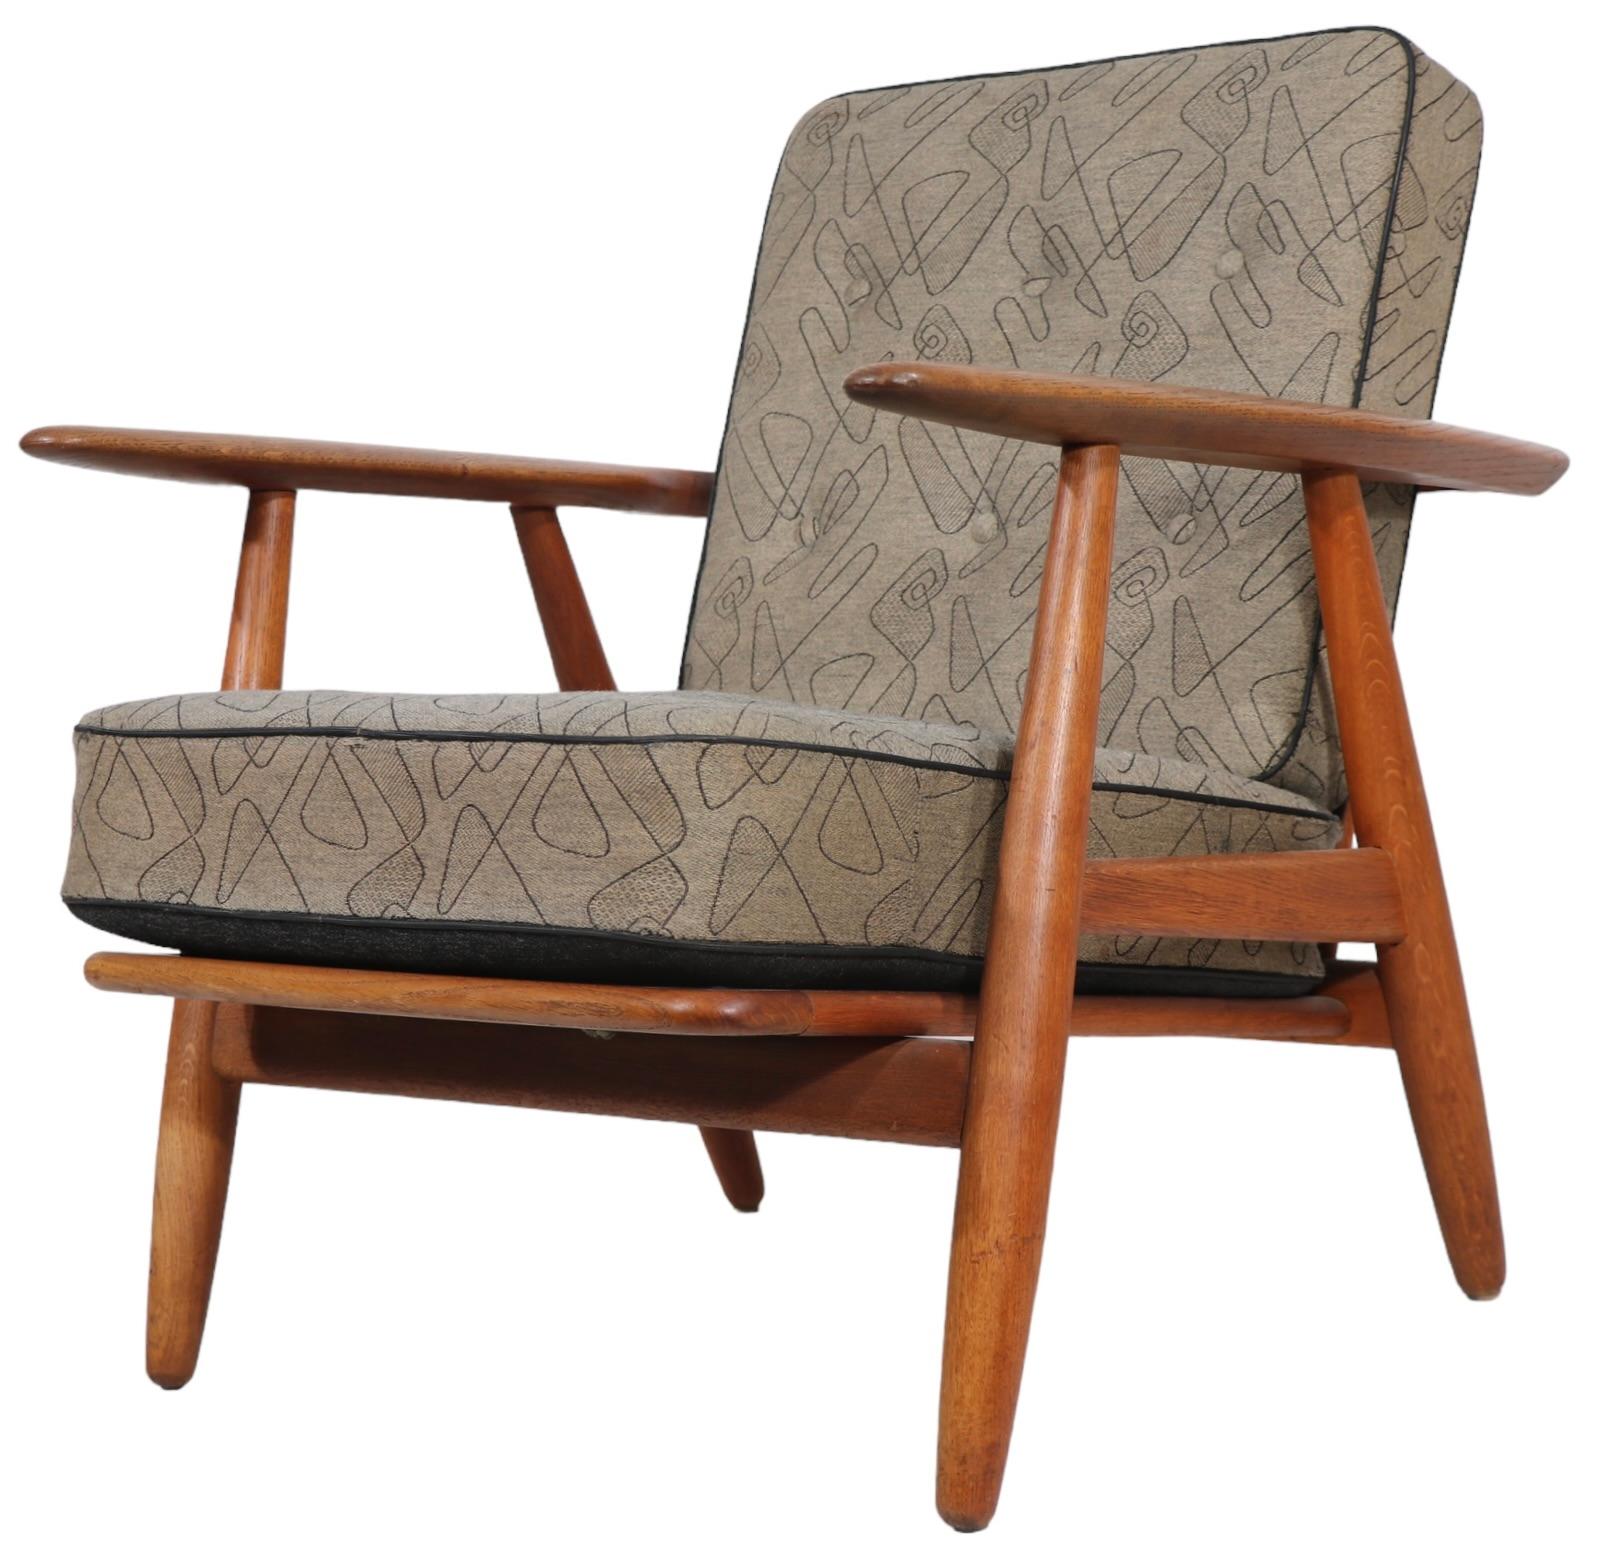 Original Hans Wegner Cigar Chair Made in Denmark for GETAMA c 1950's For Sale 2